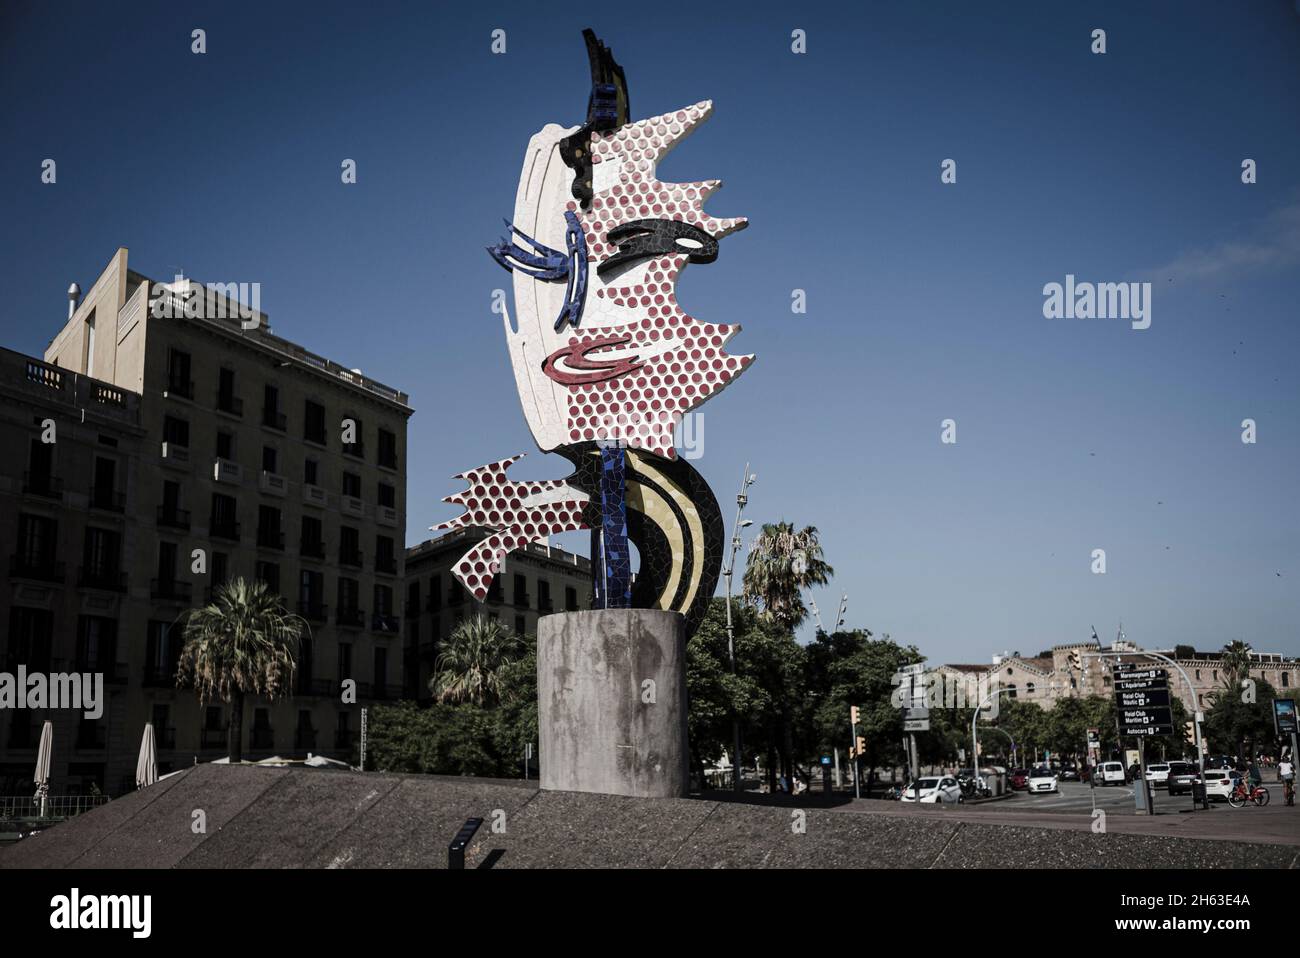 el cap de barcelona is a sculpture created by american pop artist roy lichtenstein for the 1992 summer olympics in barcelona. Stock Photo